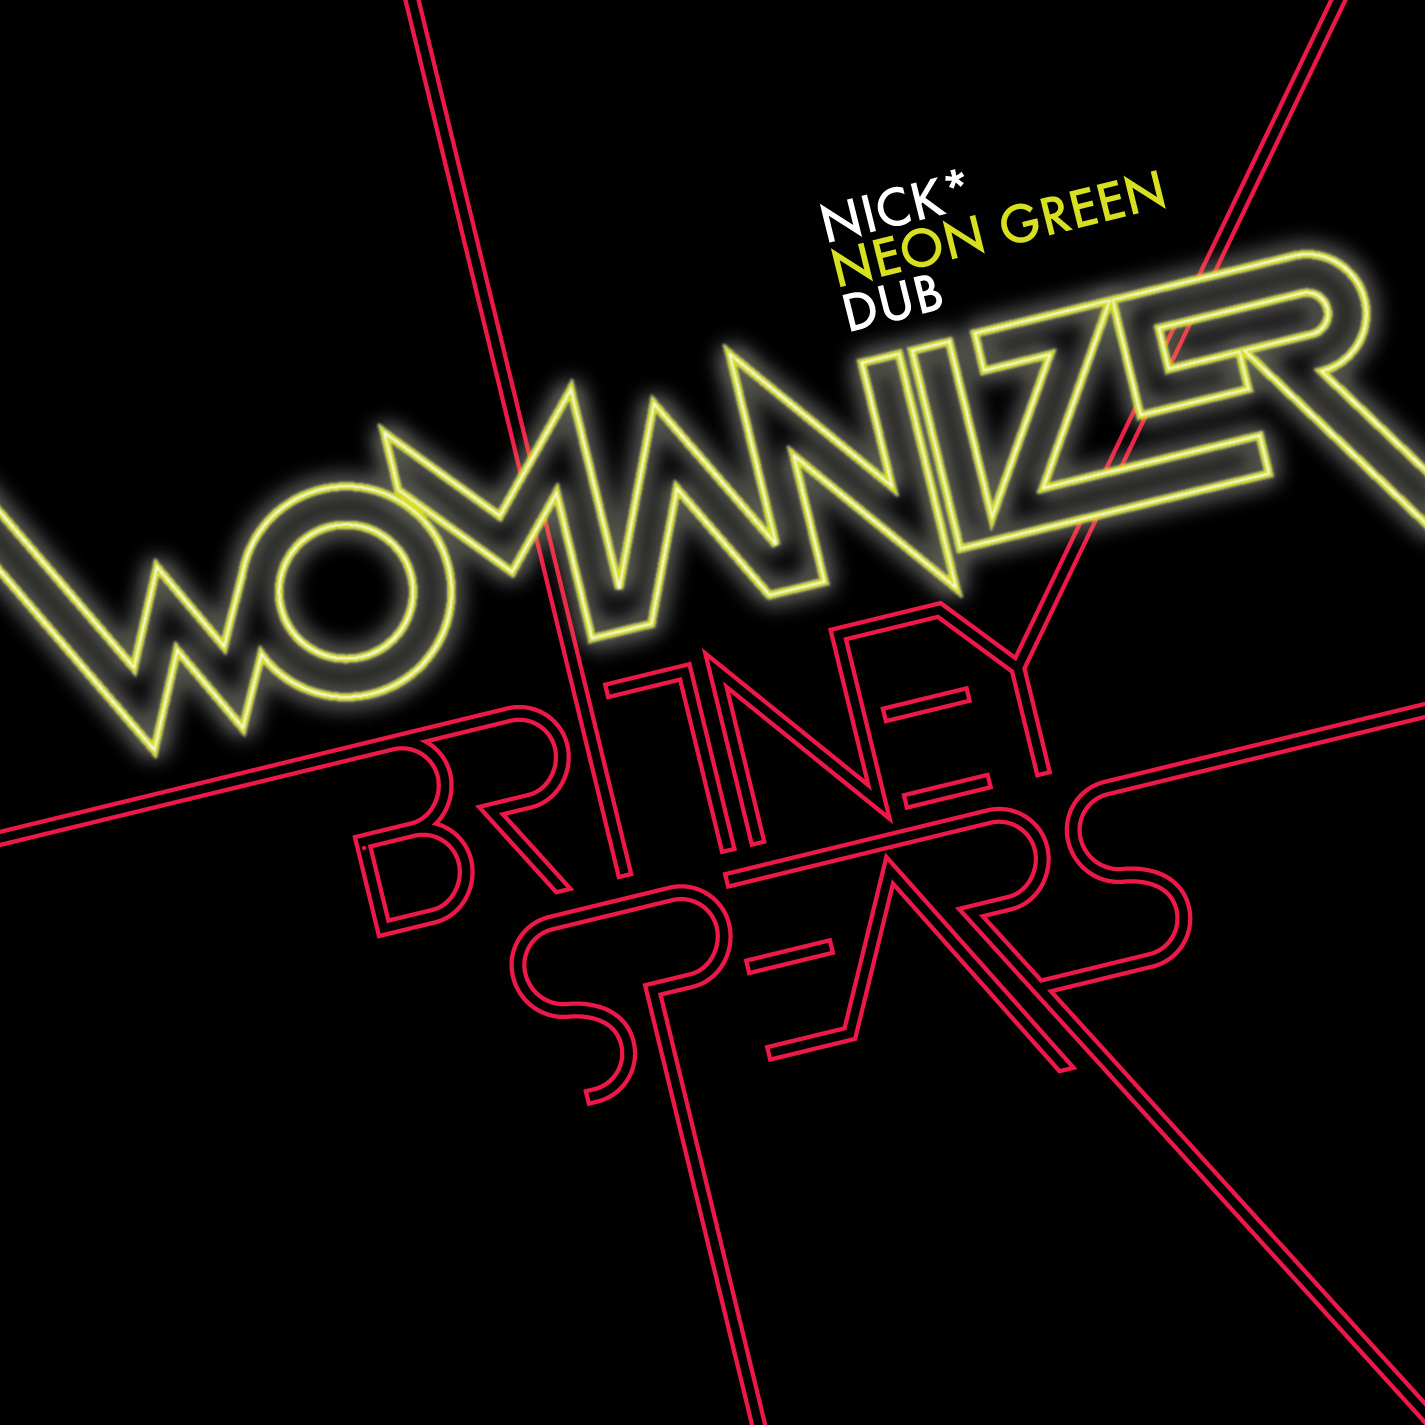 Britney Spears - Womanizer Nick* Neon Green Dub